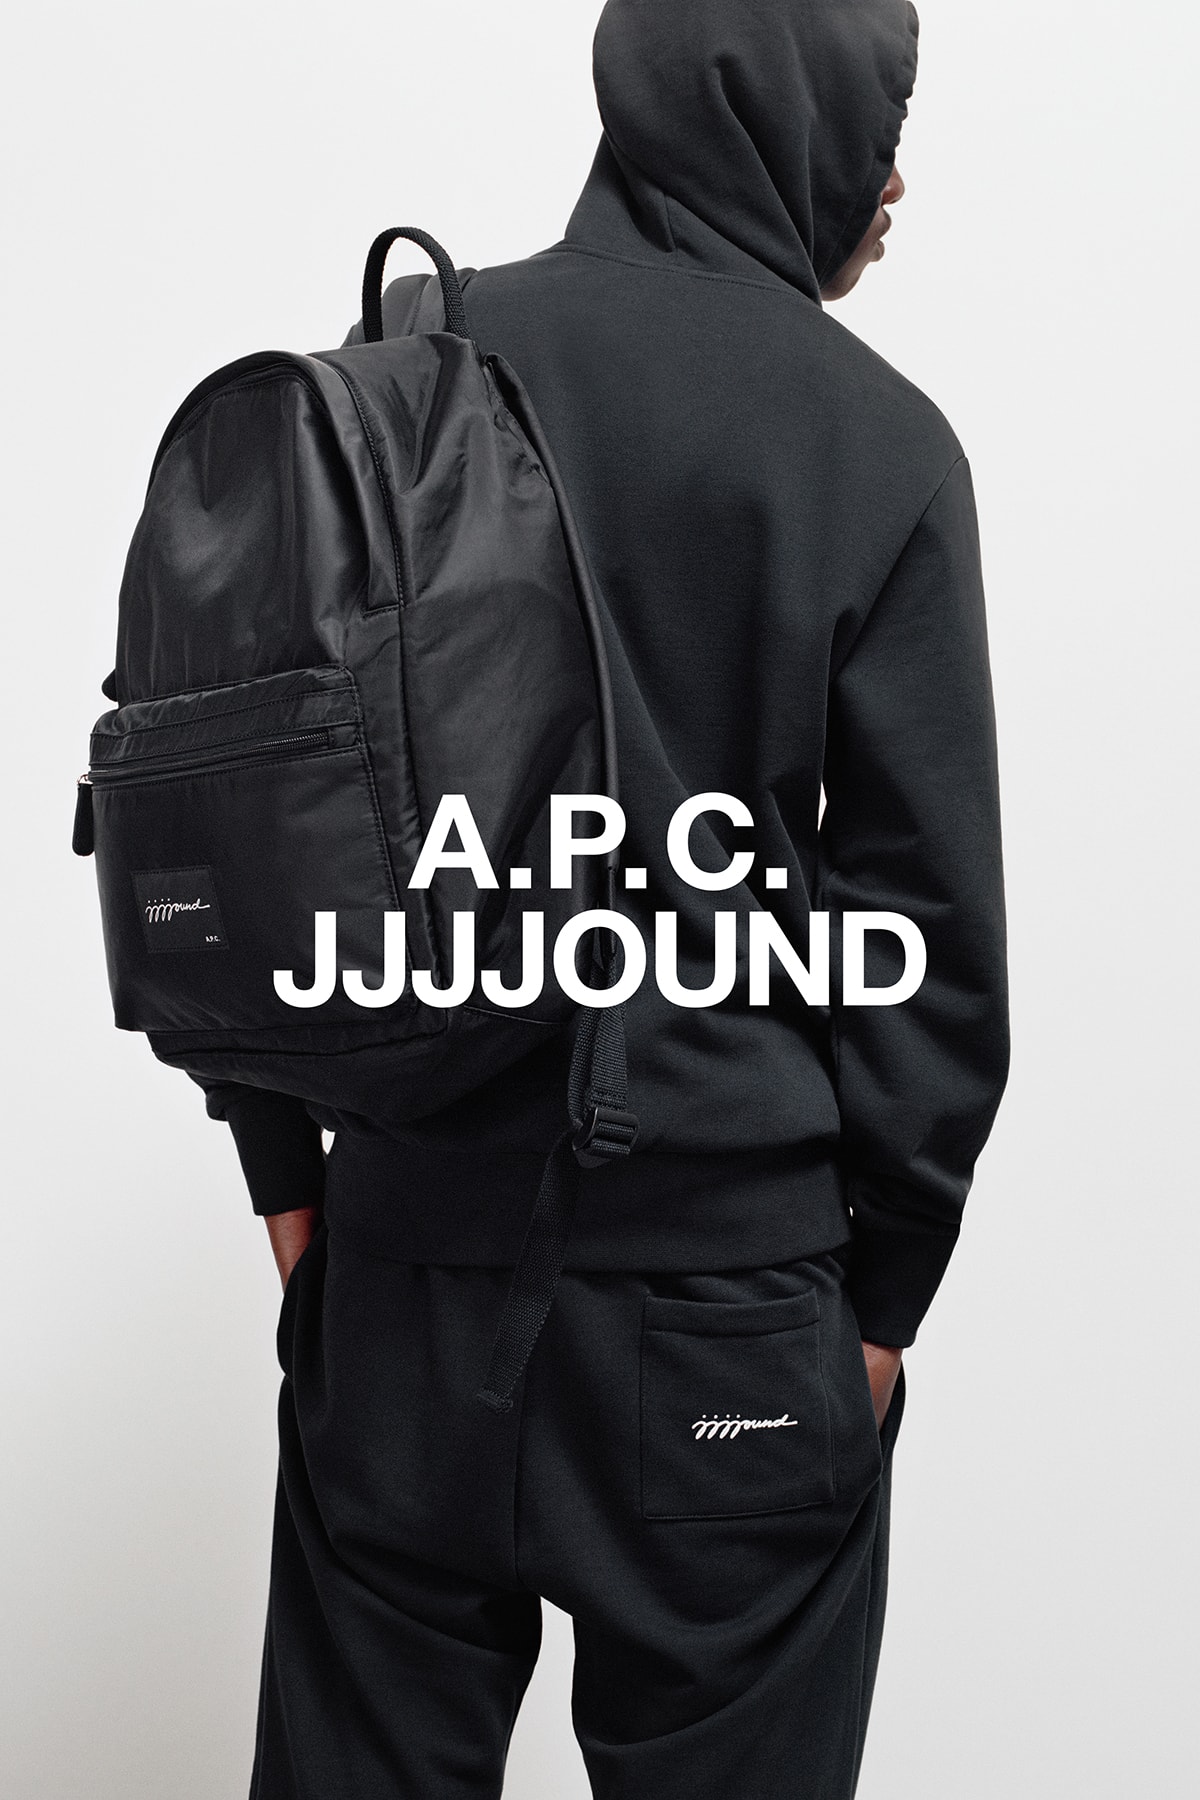 JJJJound x A.P.C. Collection Lookbook Backpack Black